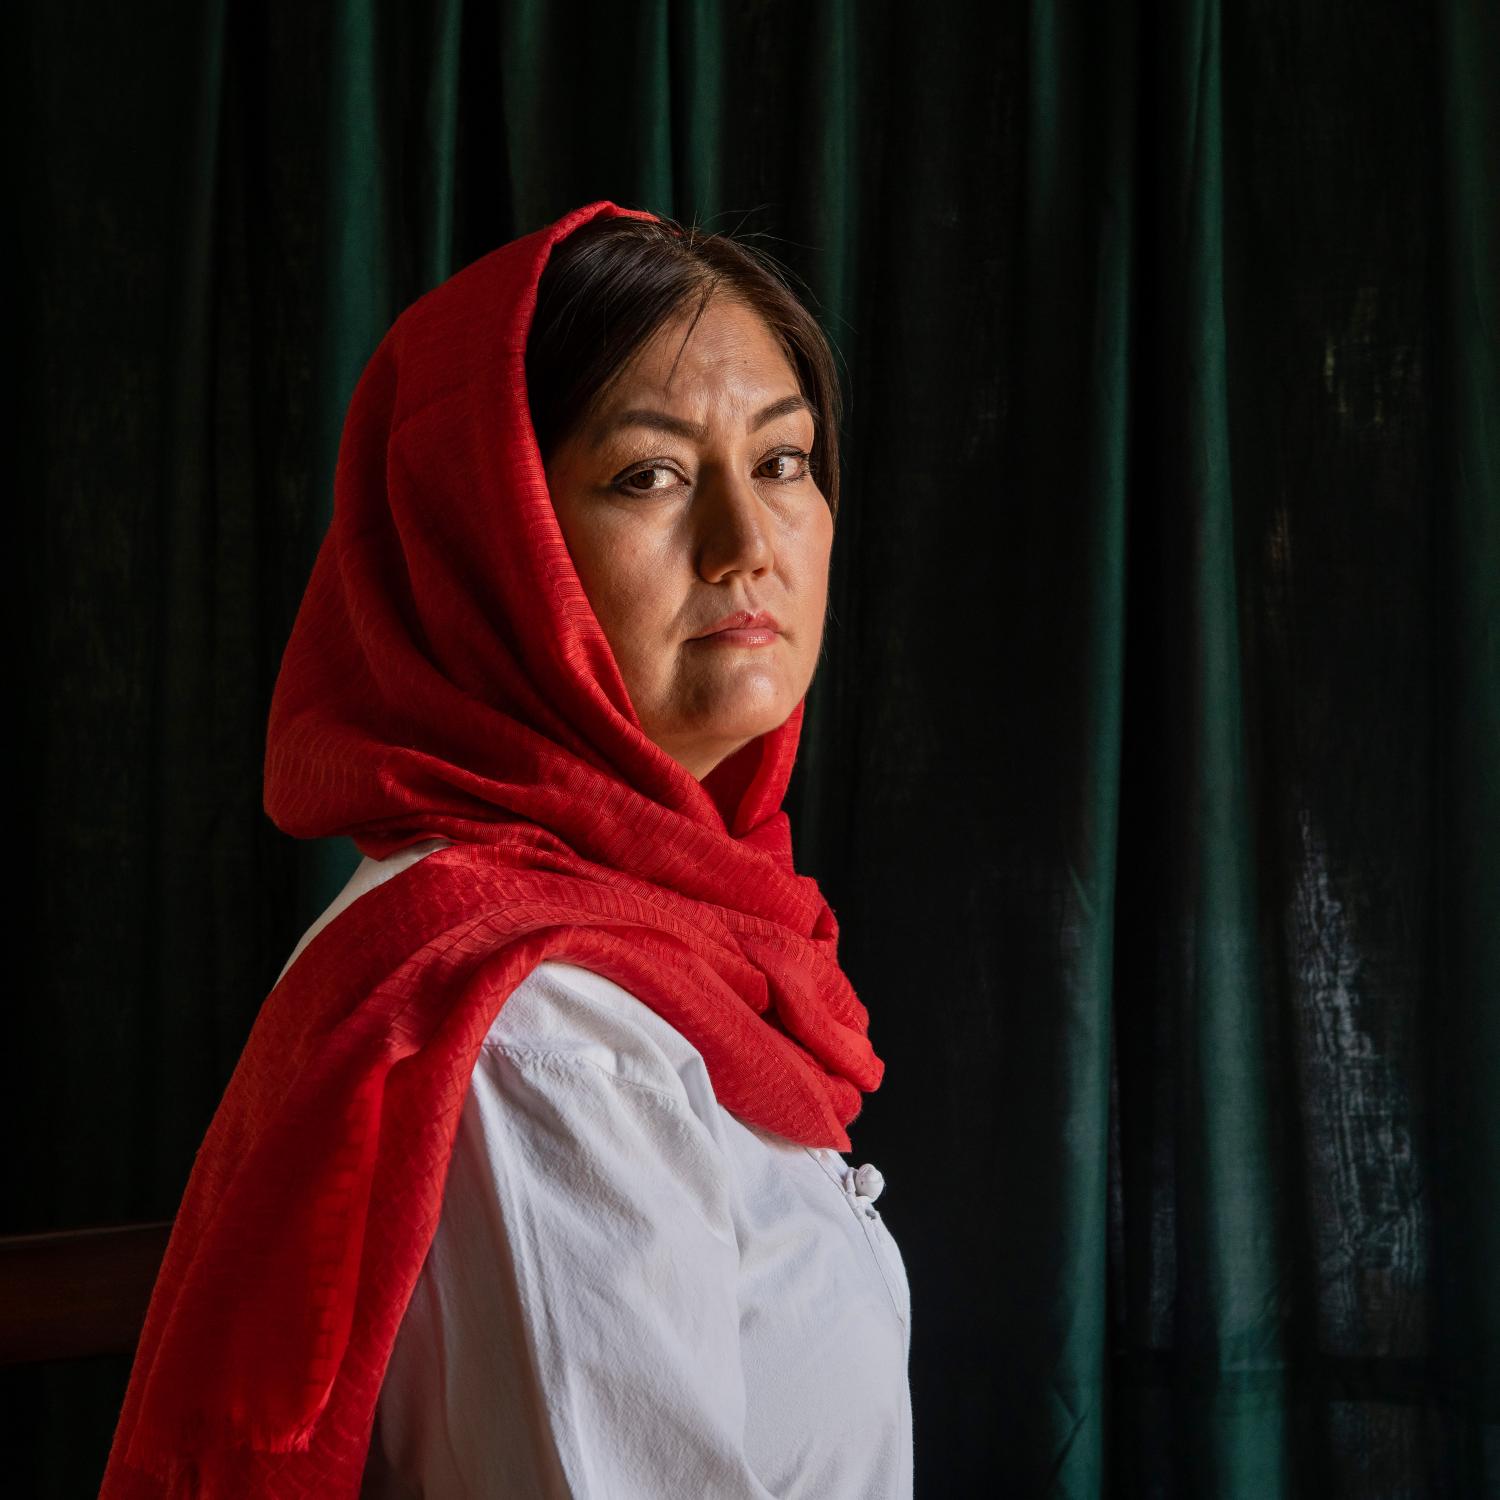 Afghan Women Demand to be Heard